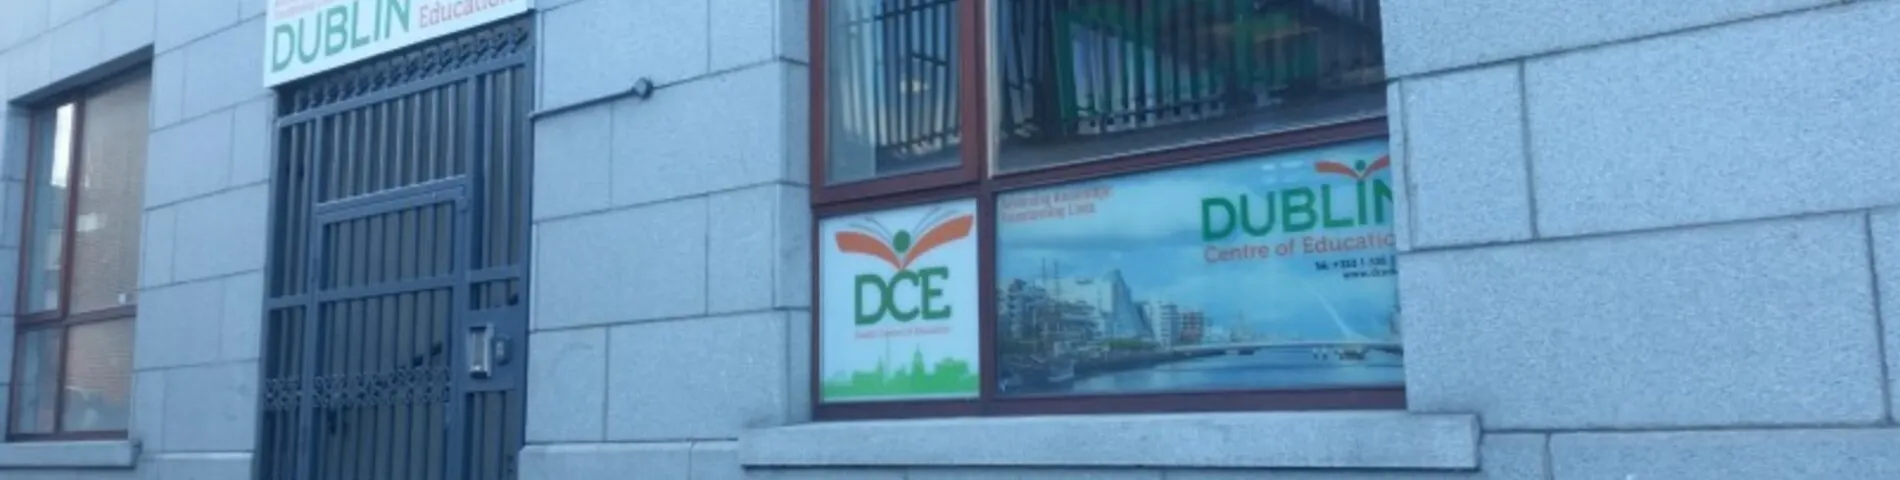 Dublin Centre of Education รูปภาพ 1